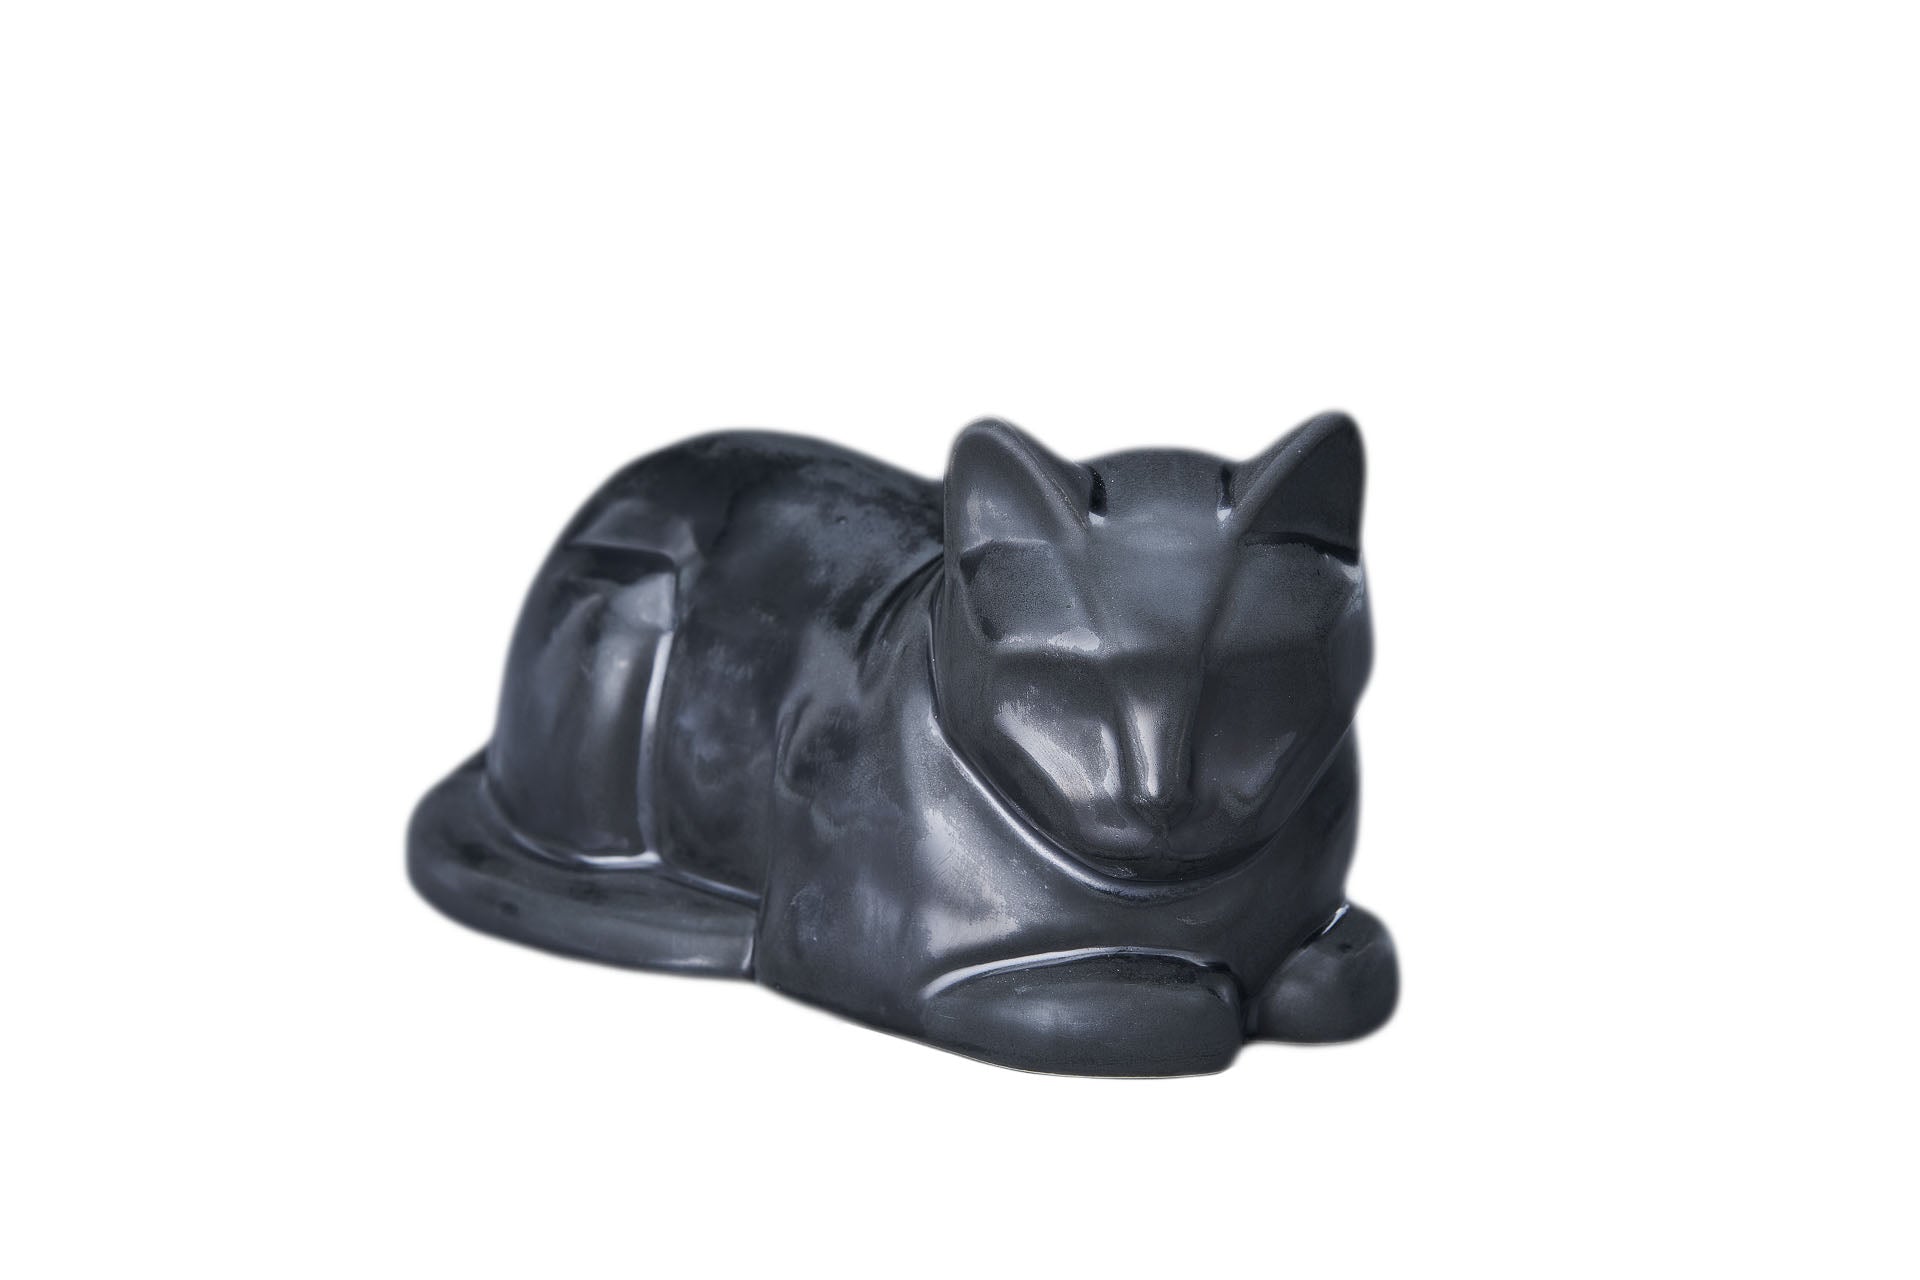 Tierurne Liegende Katze Keramik-1